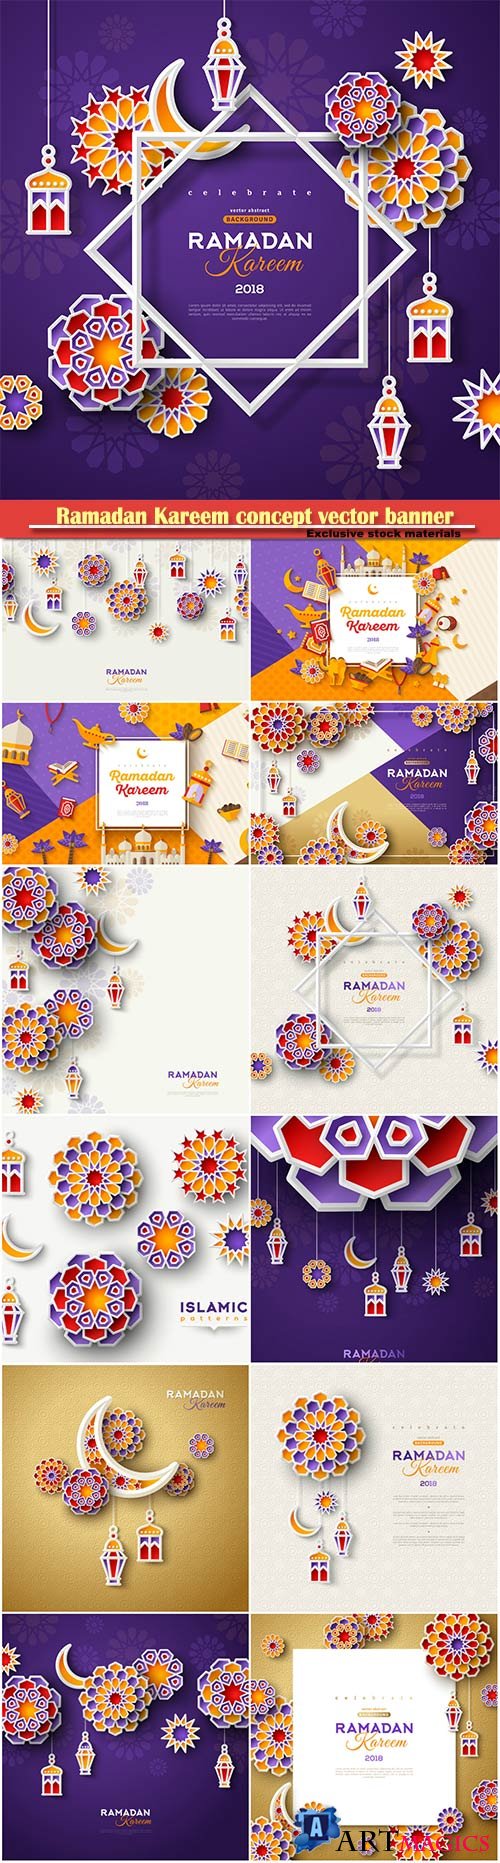 Ramadan Kareem concept vector banner with islamic geometric patterns